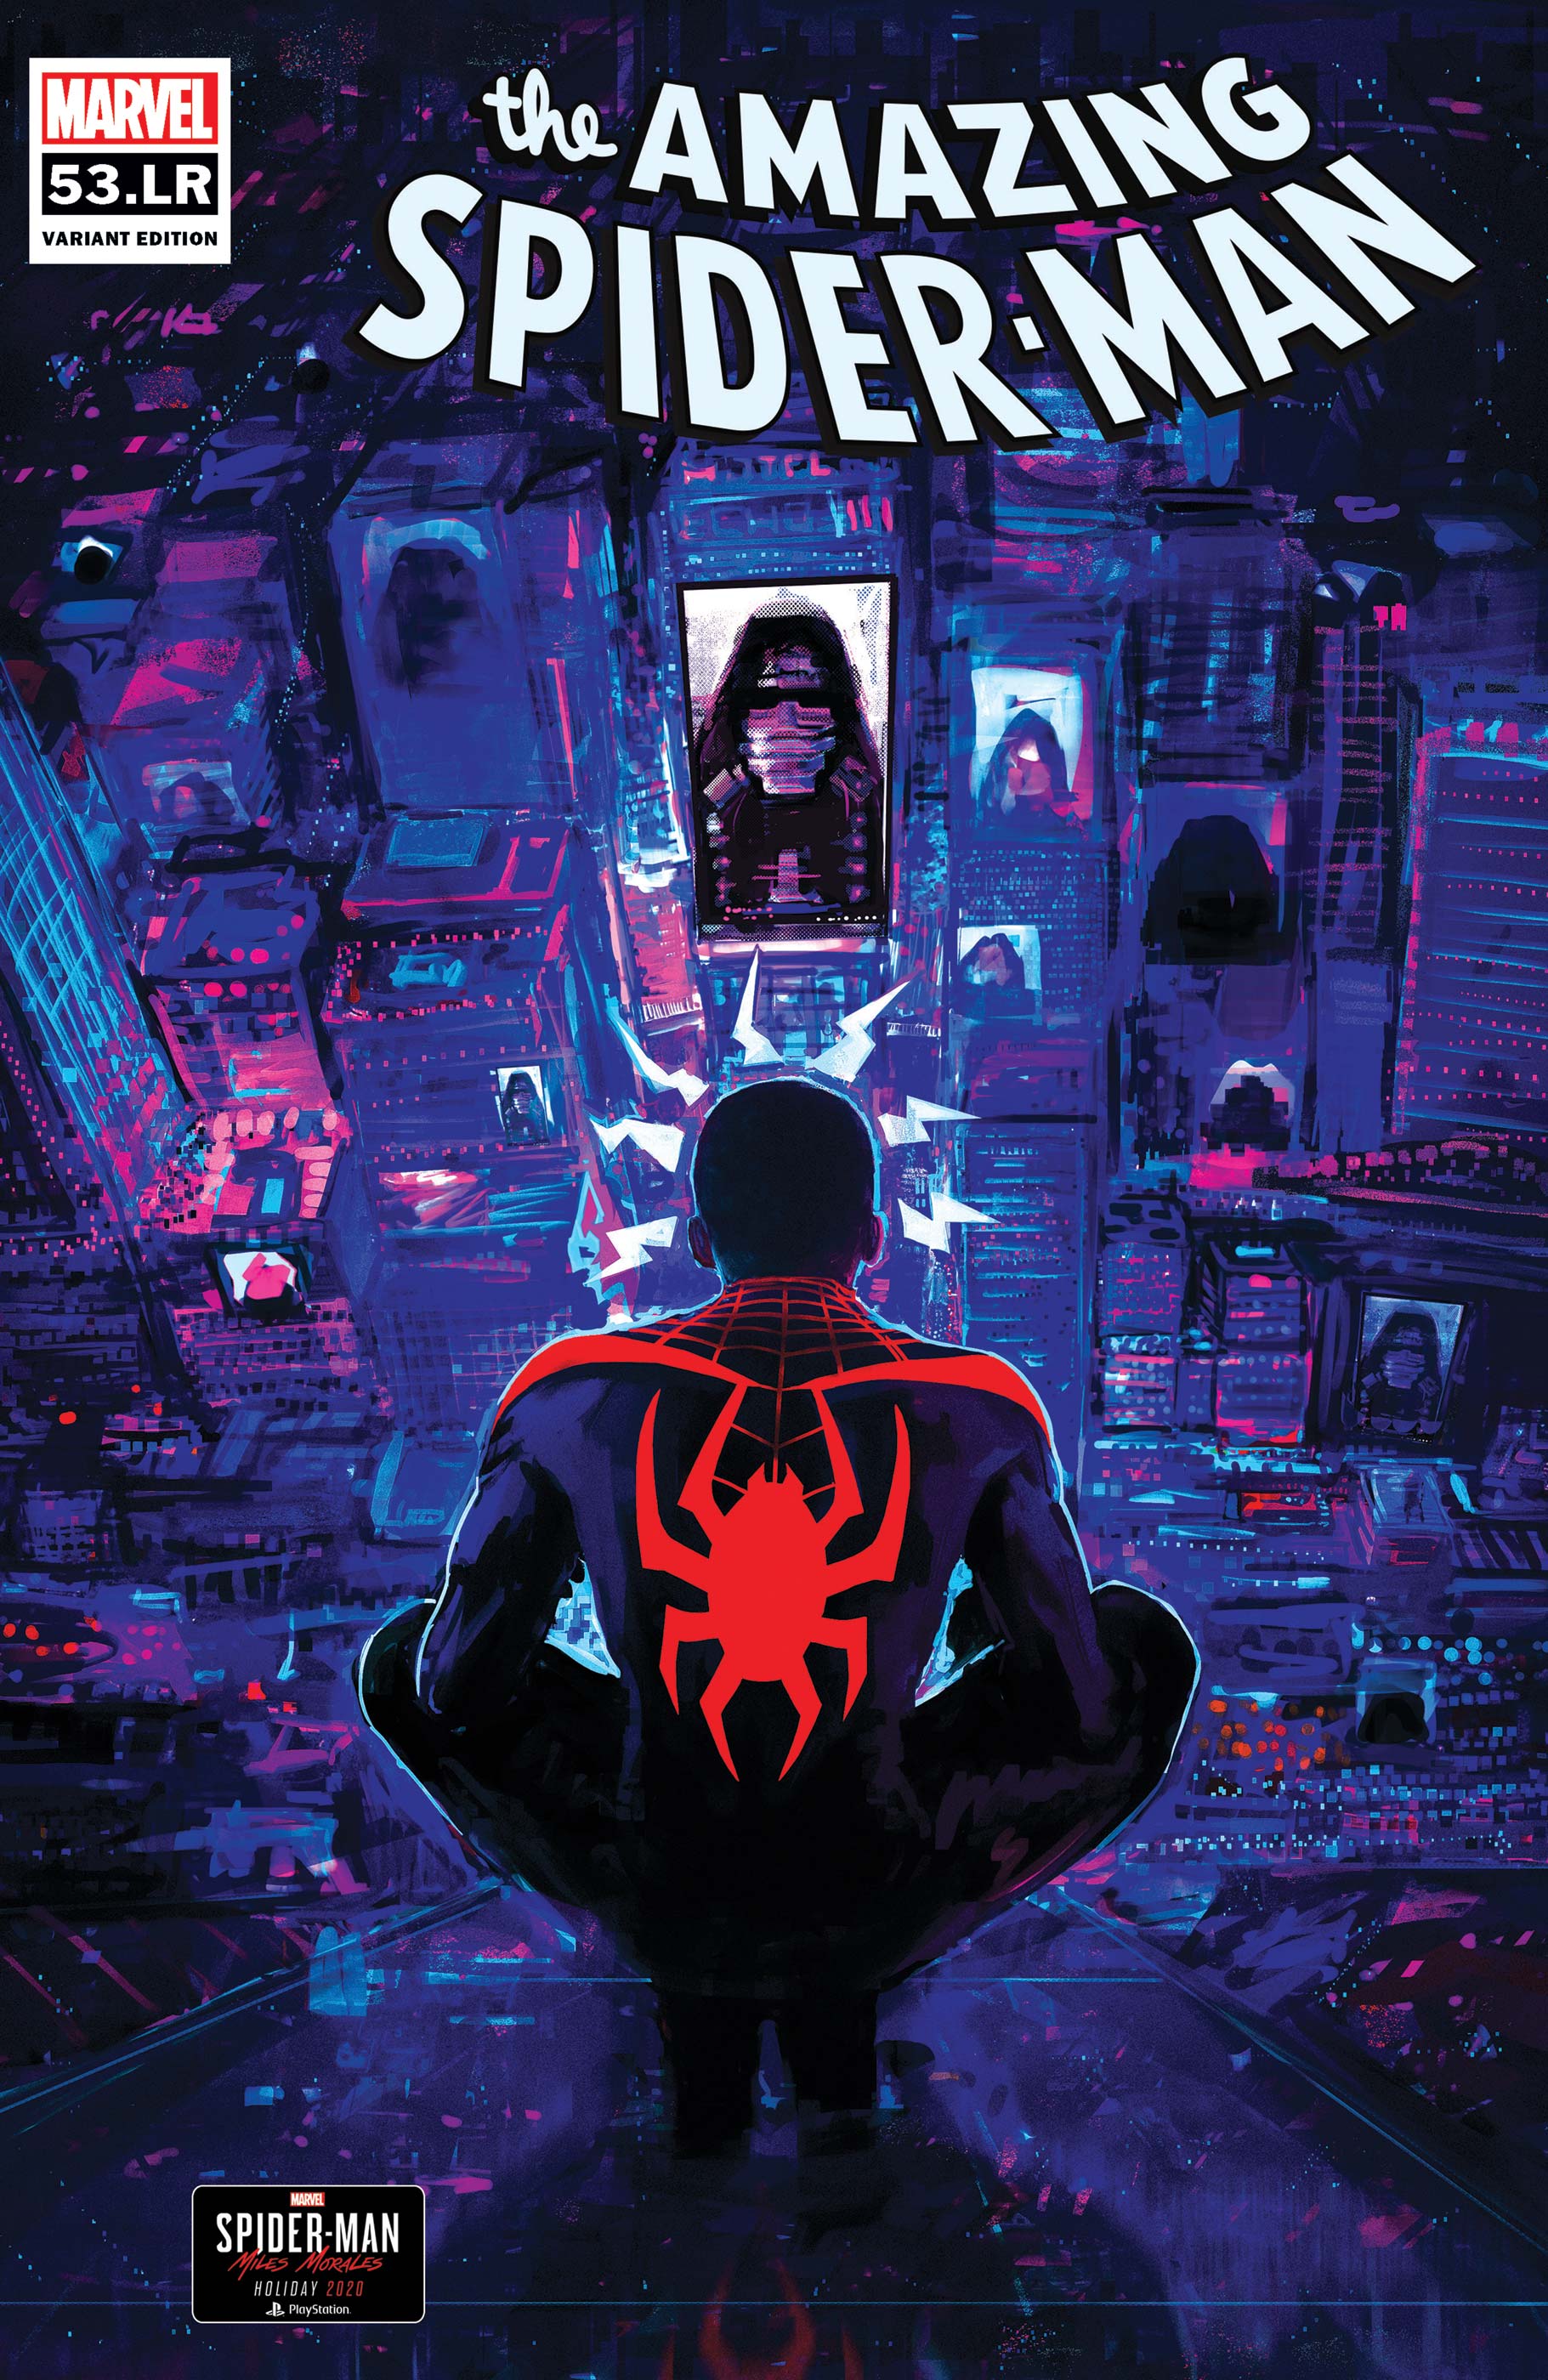 Amazing Spider-Man #53.lr Spider-Man Miles Morales Variant (2018)